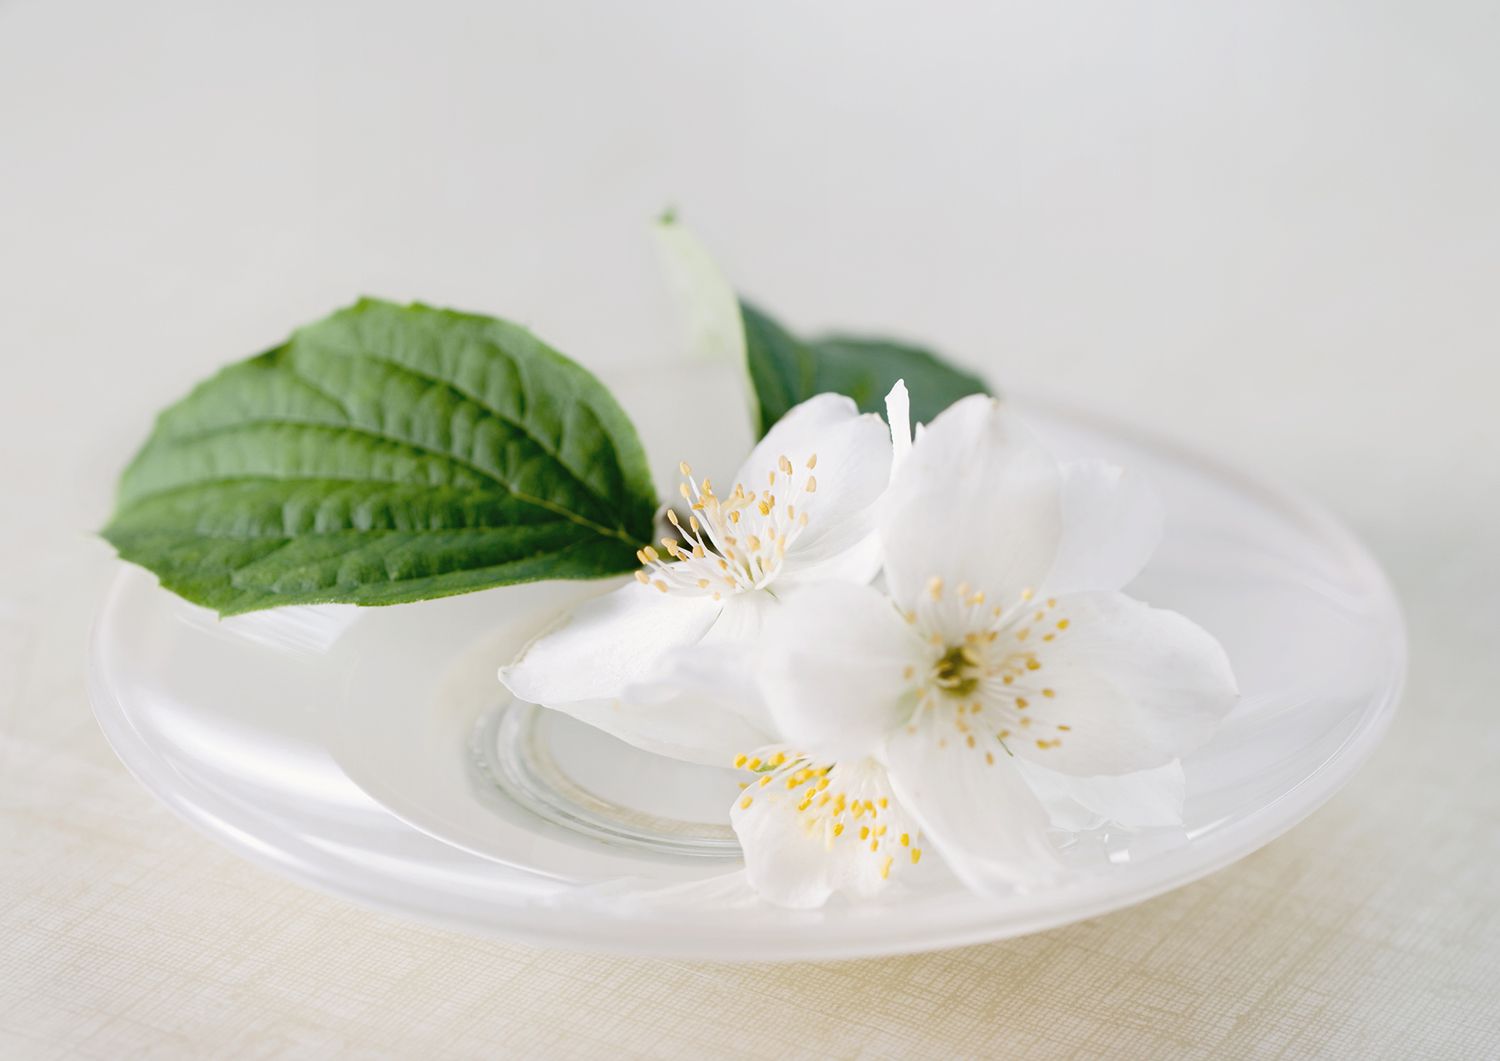 Flor de falso naranjo Littleleaf blanco sobre un plato blanco